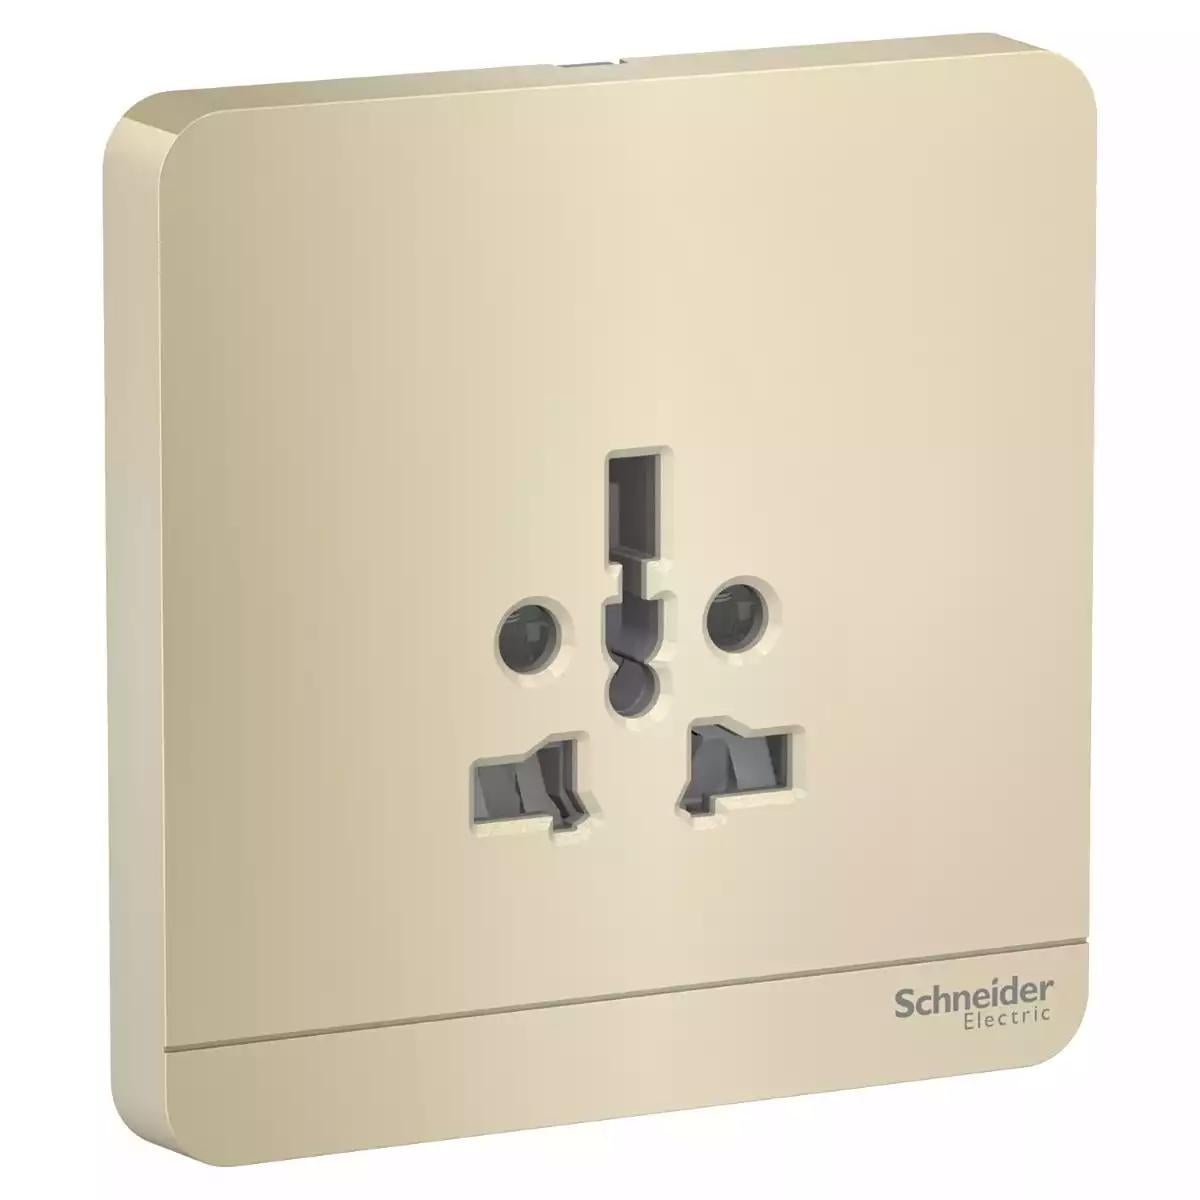 Schneider Electric AvatarOn socket-outlet, 16A, 2P + 3P, British BS 1363A, White